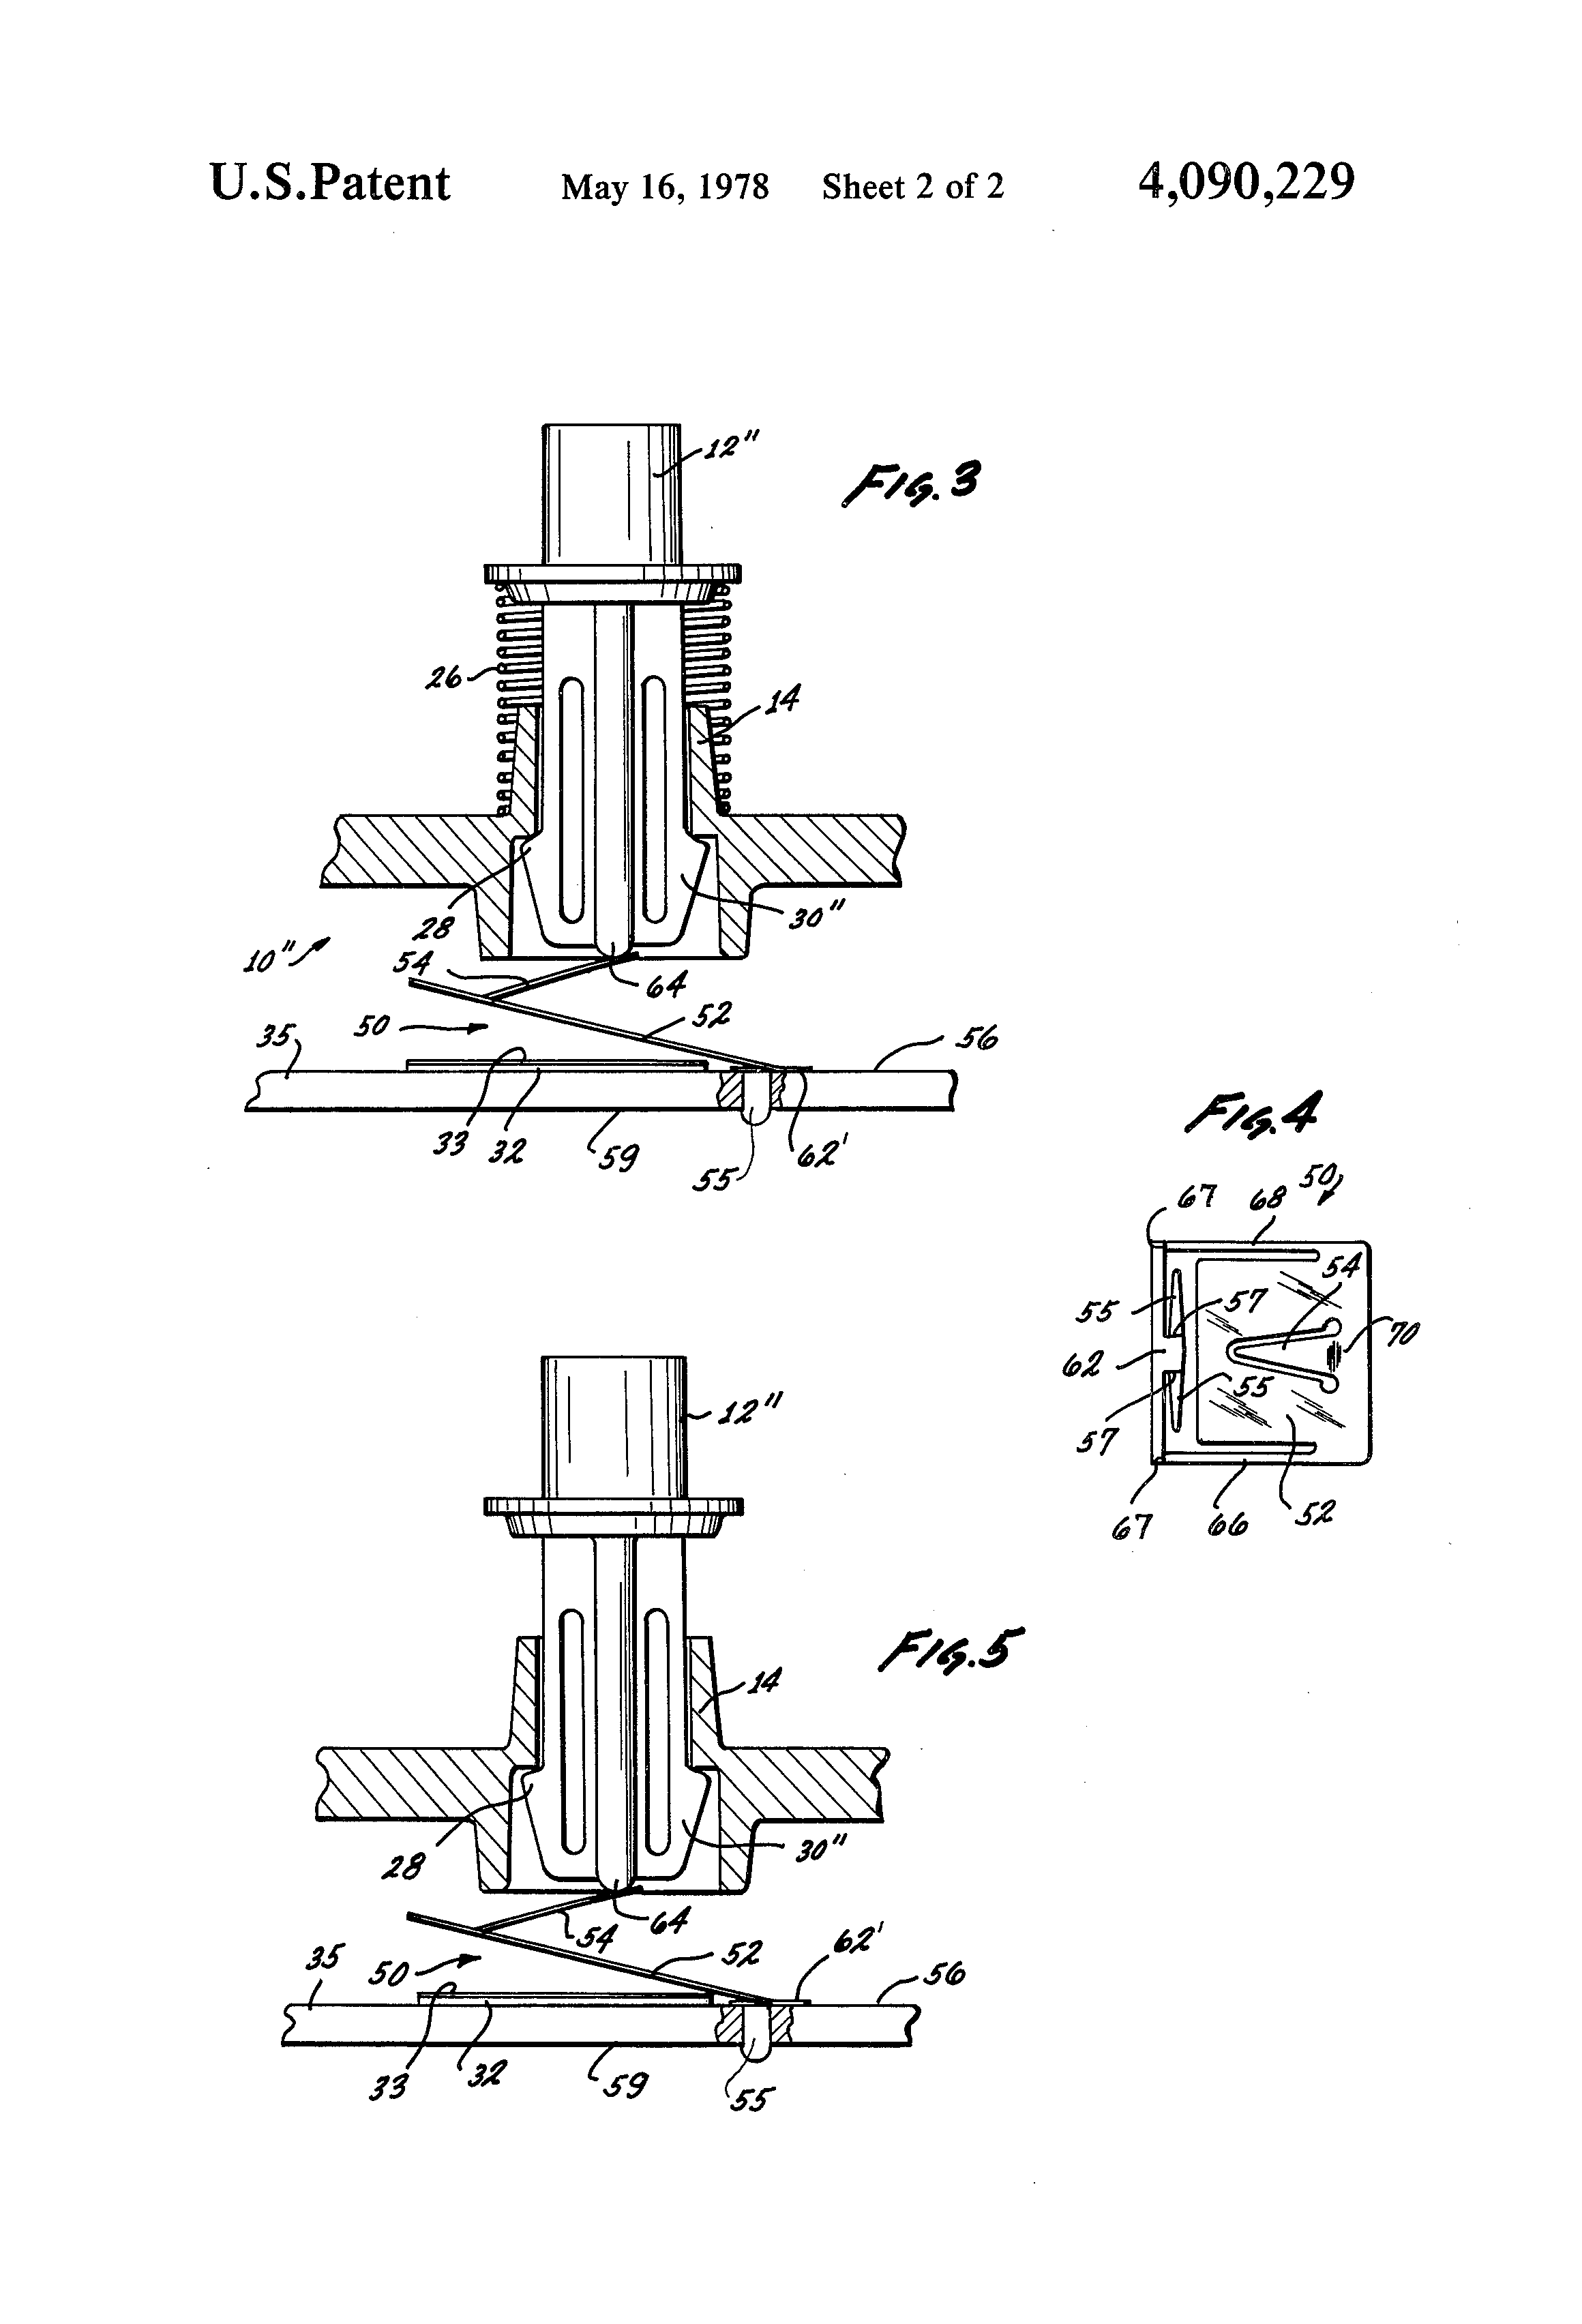 Patent Image #1